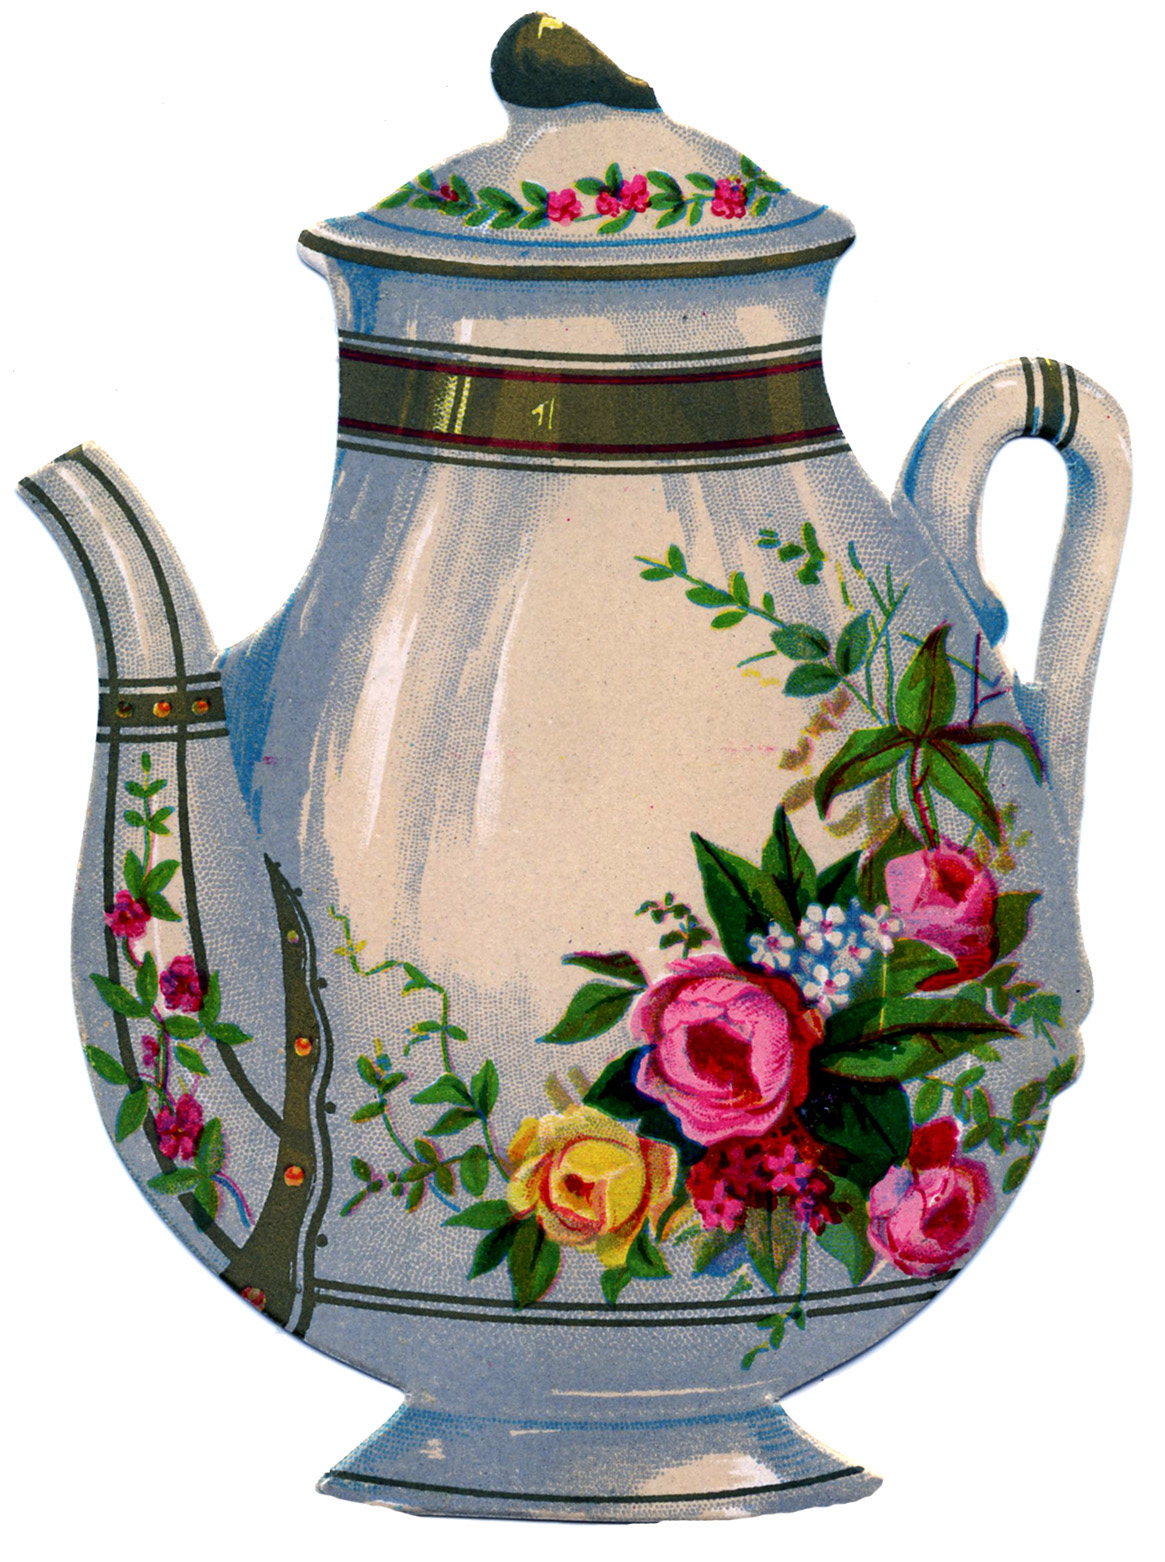 6 Vintage Teapots, Tea Kettle Clip Art, Tea Pot Clipart, Tea Pot